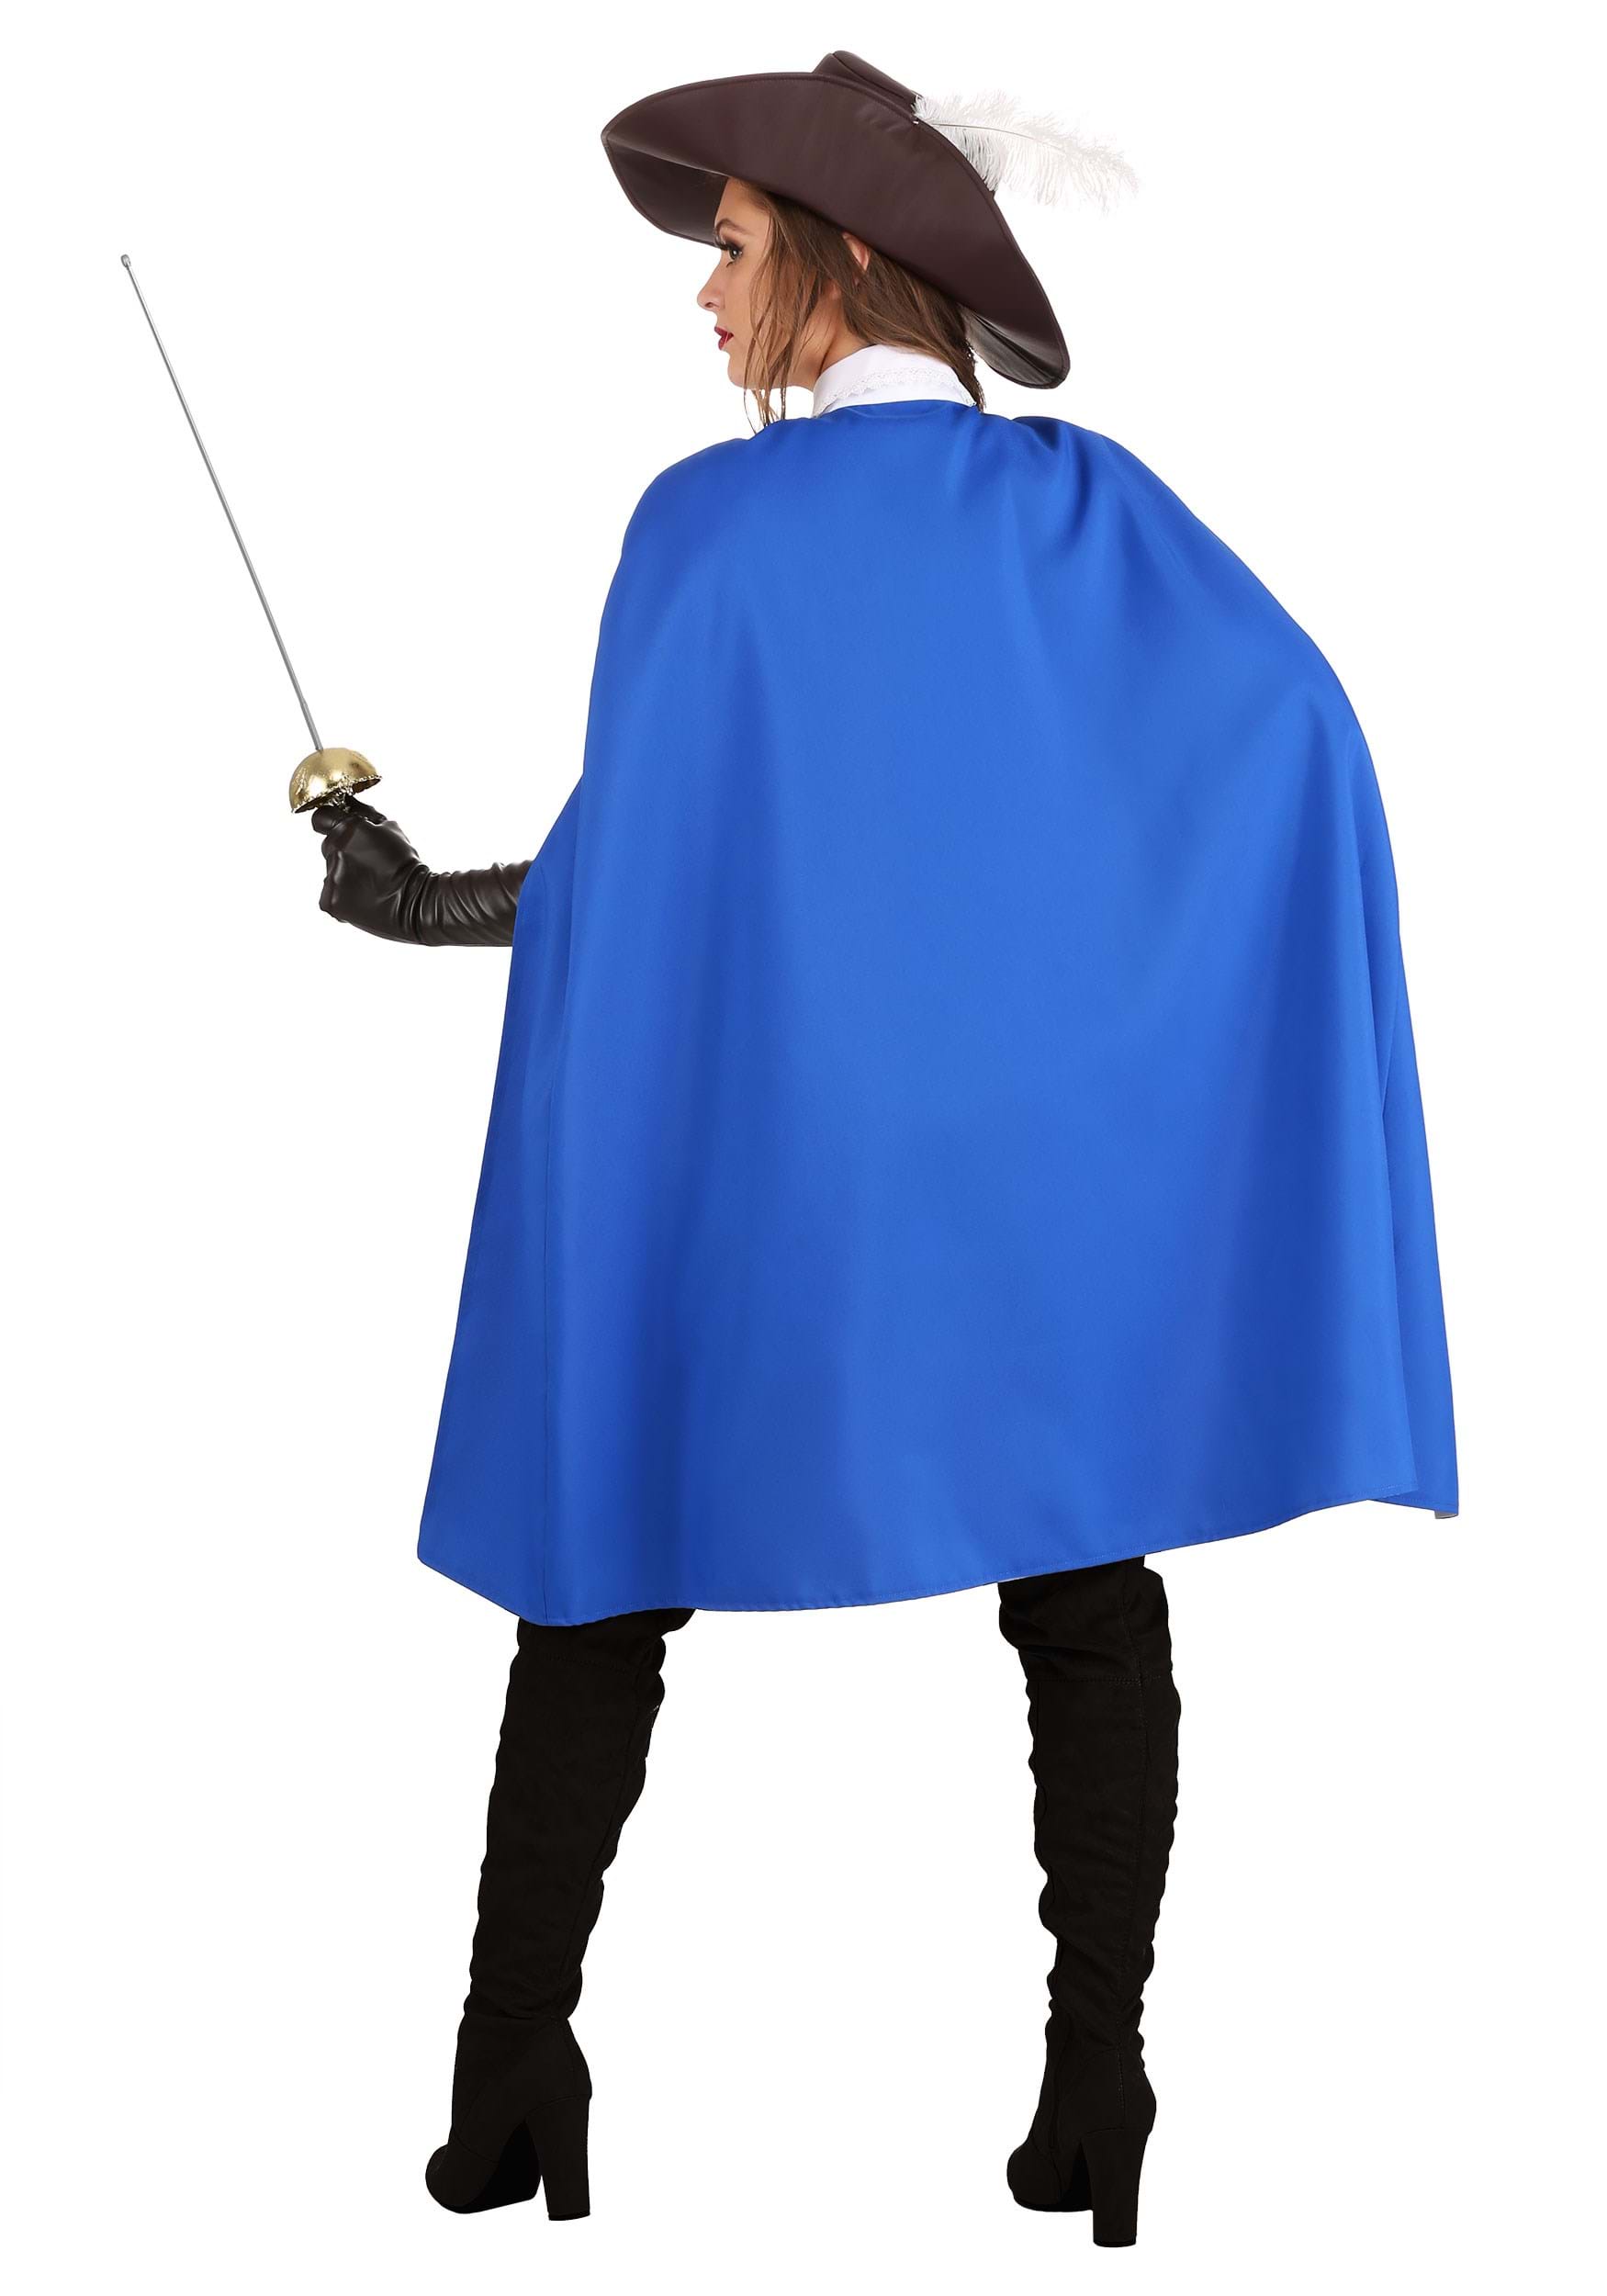 Musketeer Costume For Women